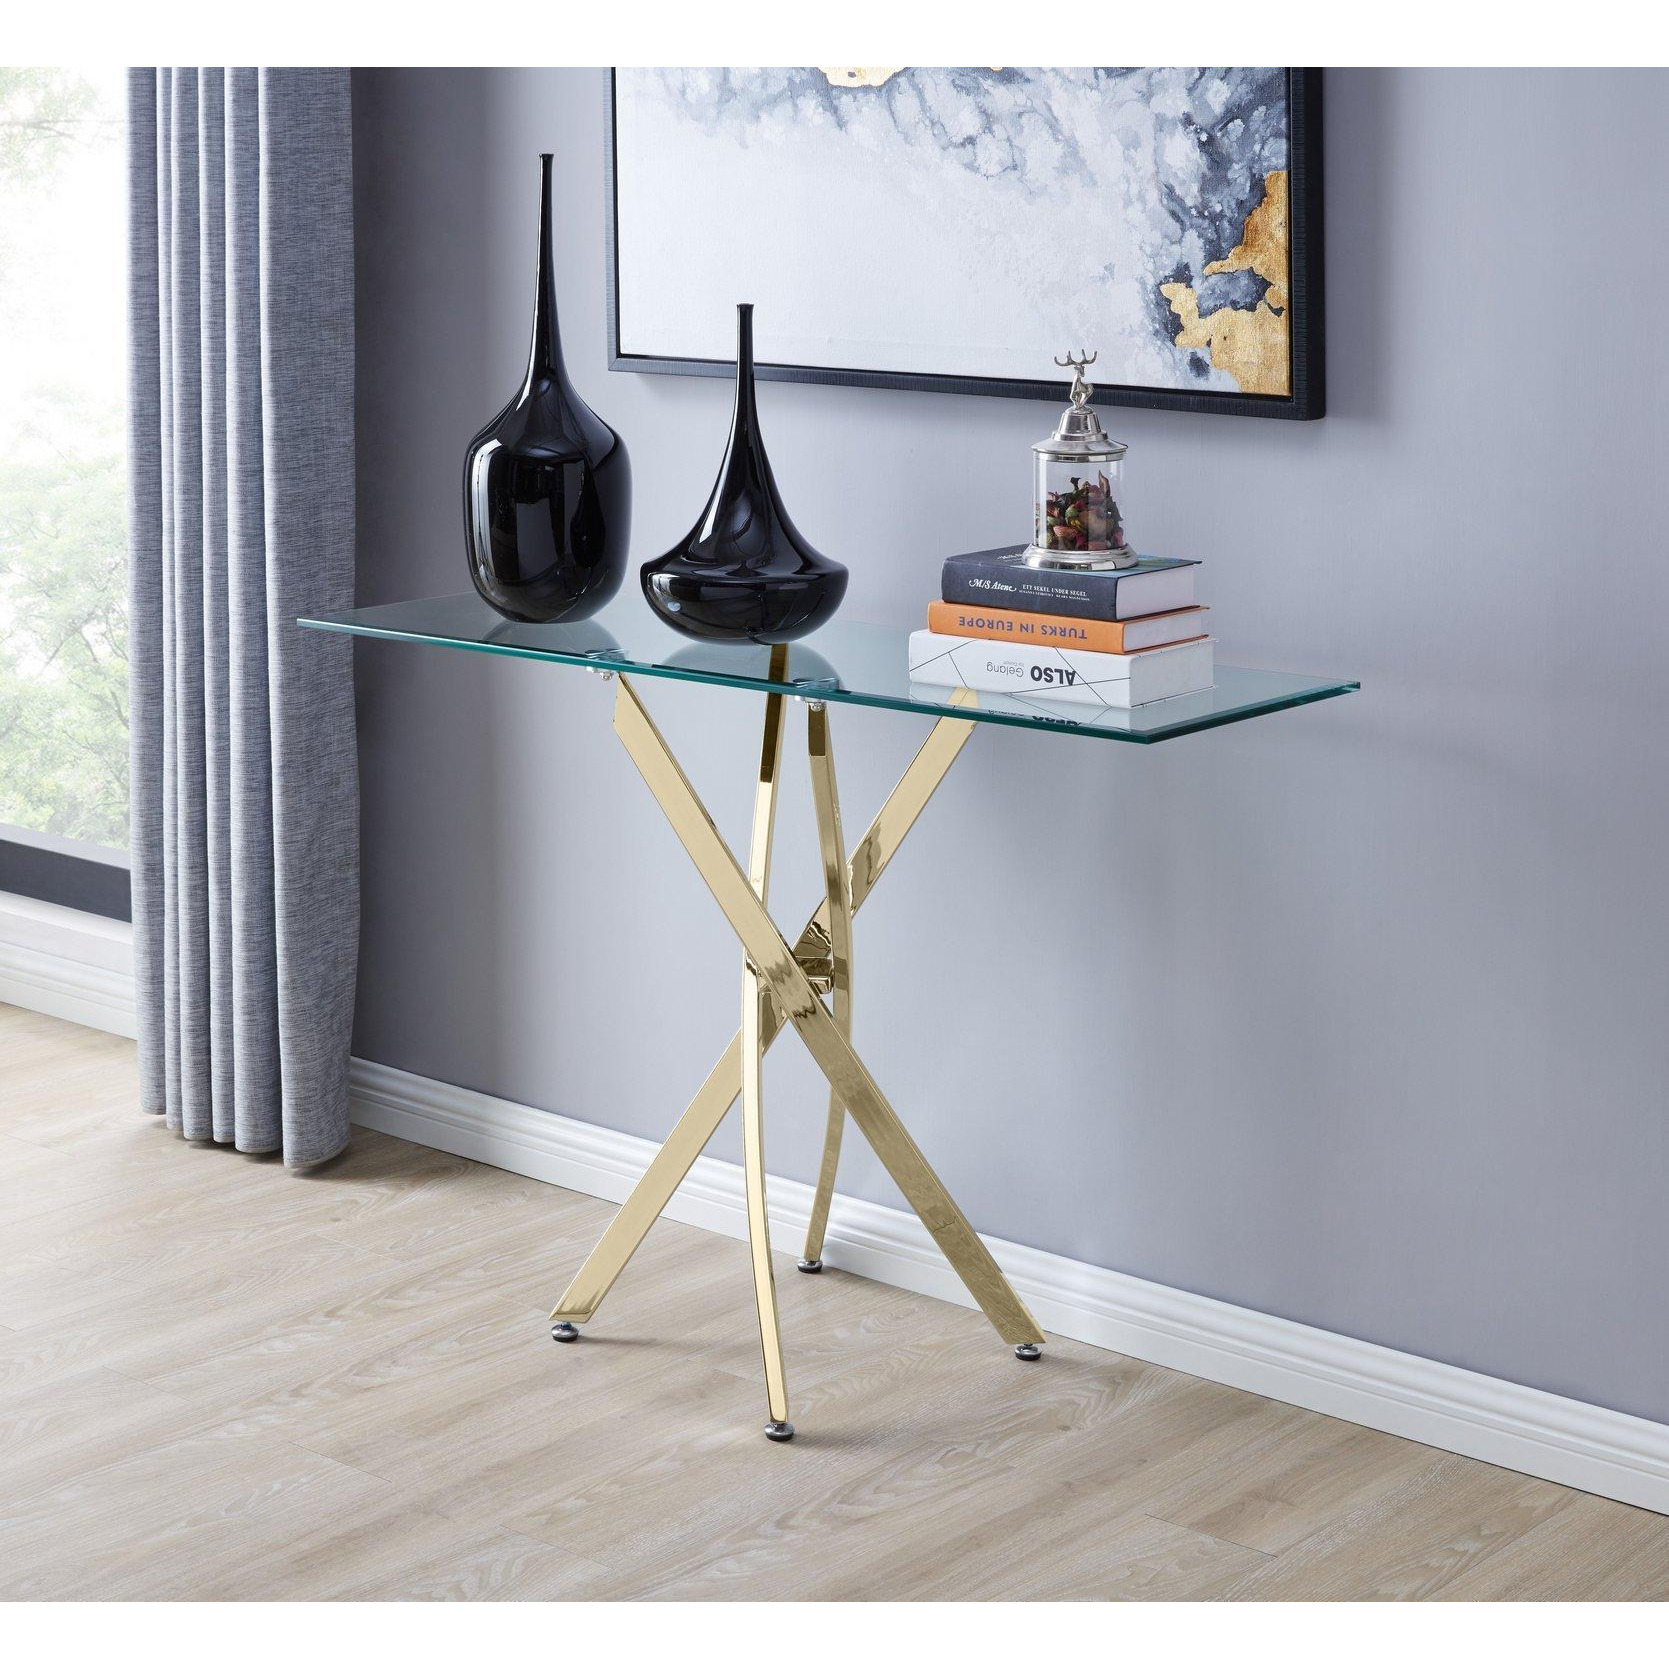 Leonardo Rectangular Glass Console Table with Metal Angled Starburst Legs for Modern Living Room - image 1